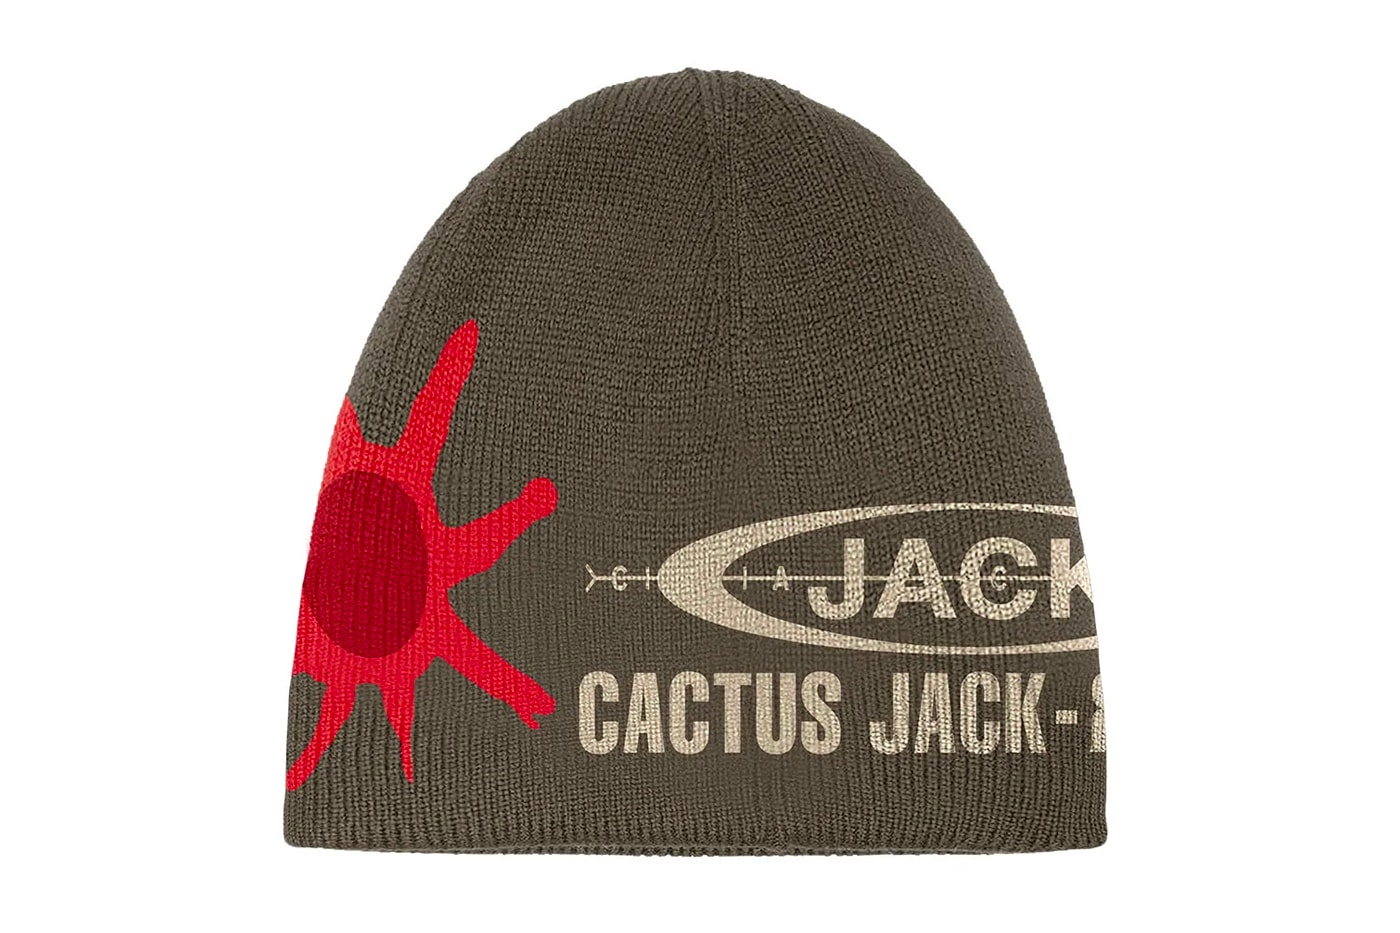 Travis Scott Air Jordan 1 Low OG Reverse Mocha Cactus Jack Collection Release Info Date Buy Price 